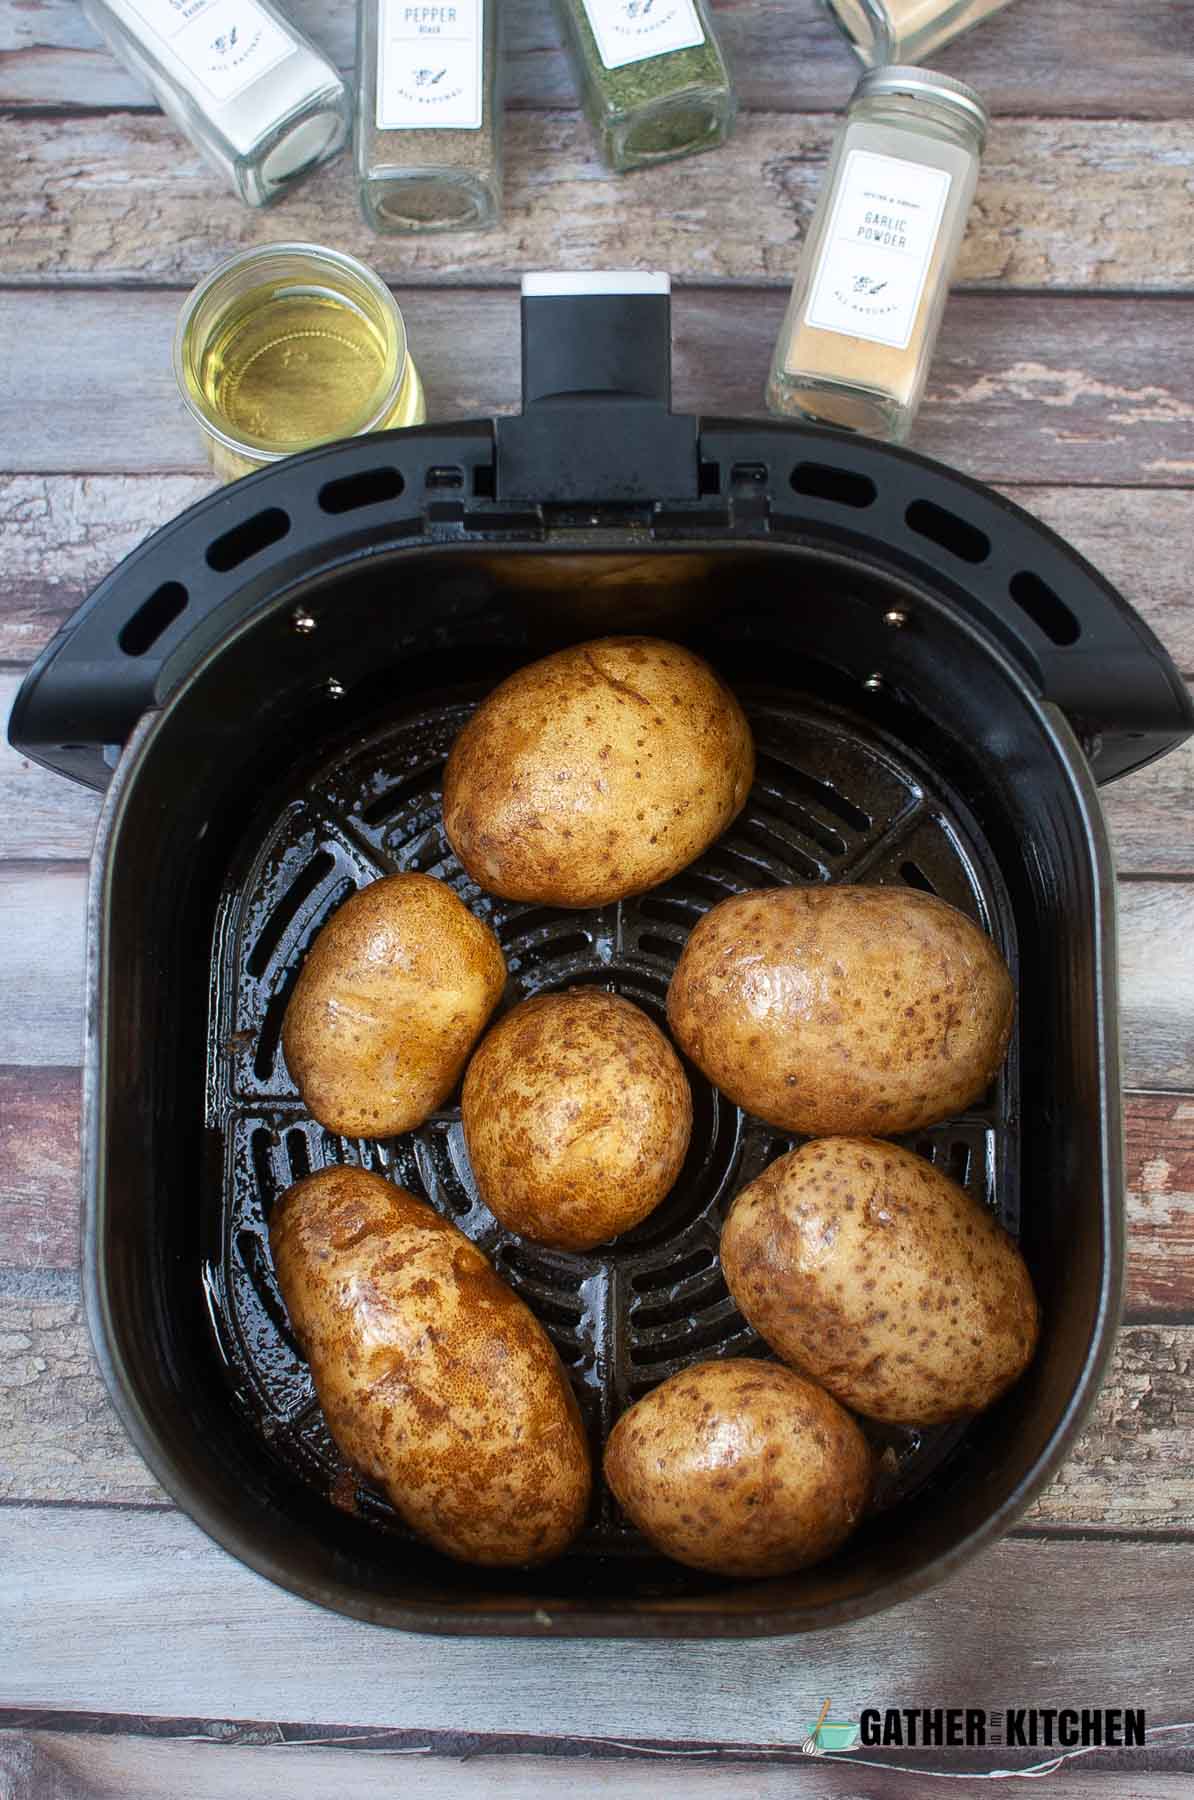 Raw potatoes coated in oil in air fryer basket.